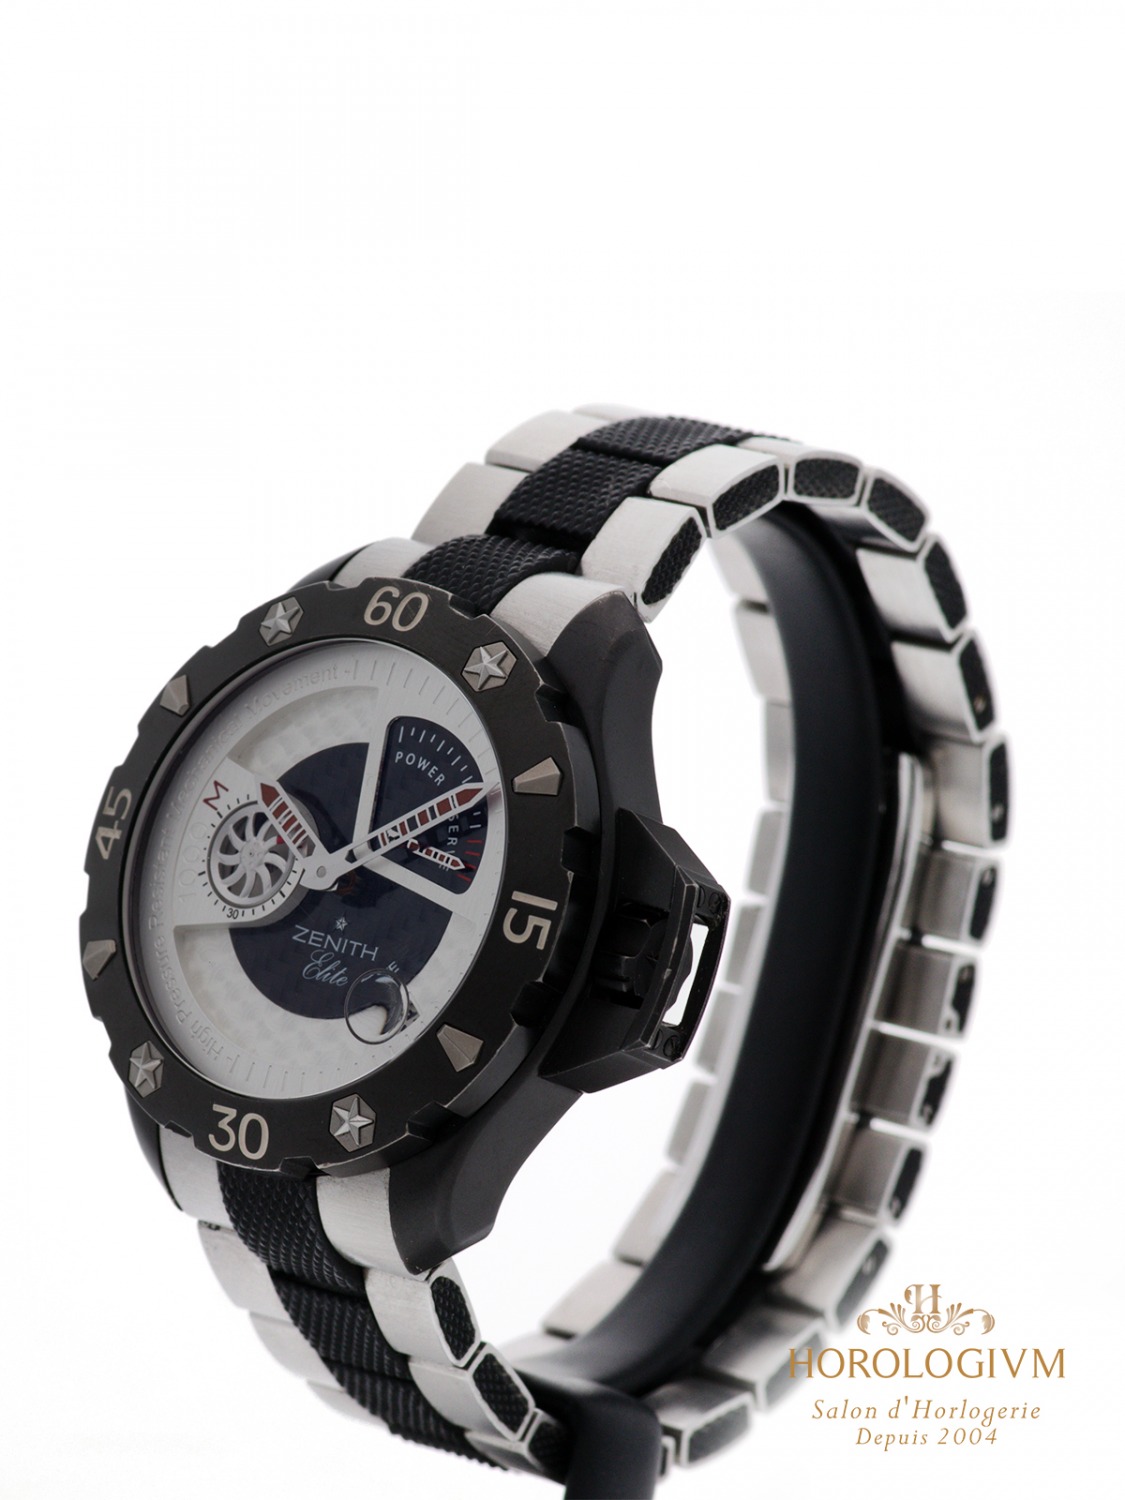 Zenith Defy-Extreme Elite Ref. 96.0515.685 watch, black PVD (Physical Vapor Deposition)